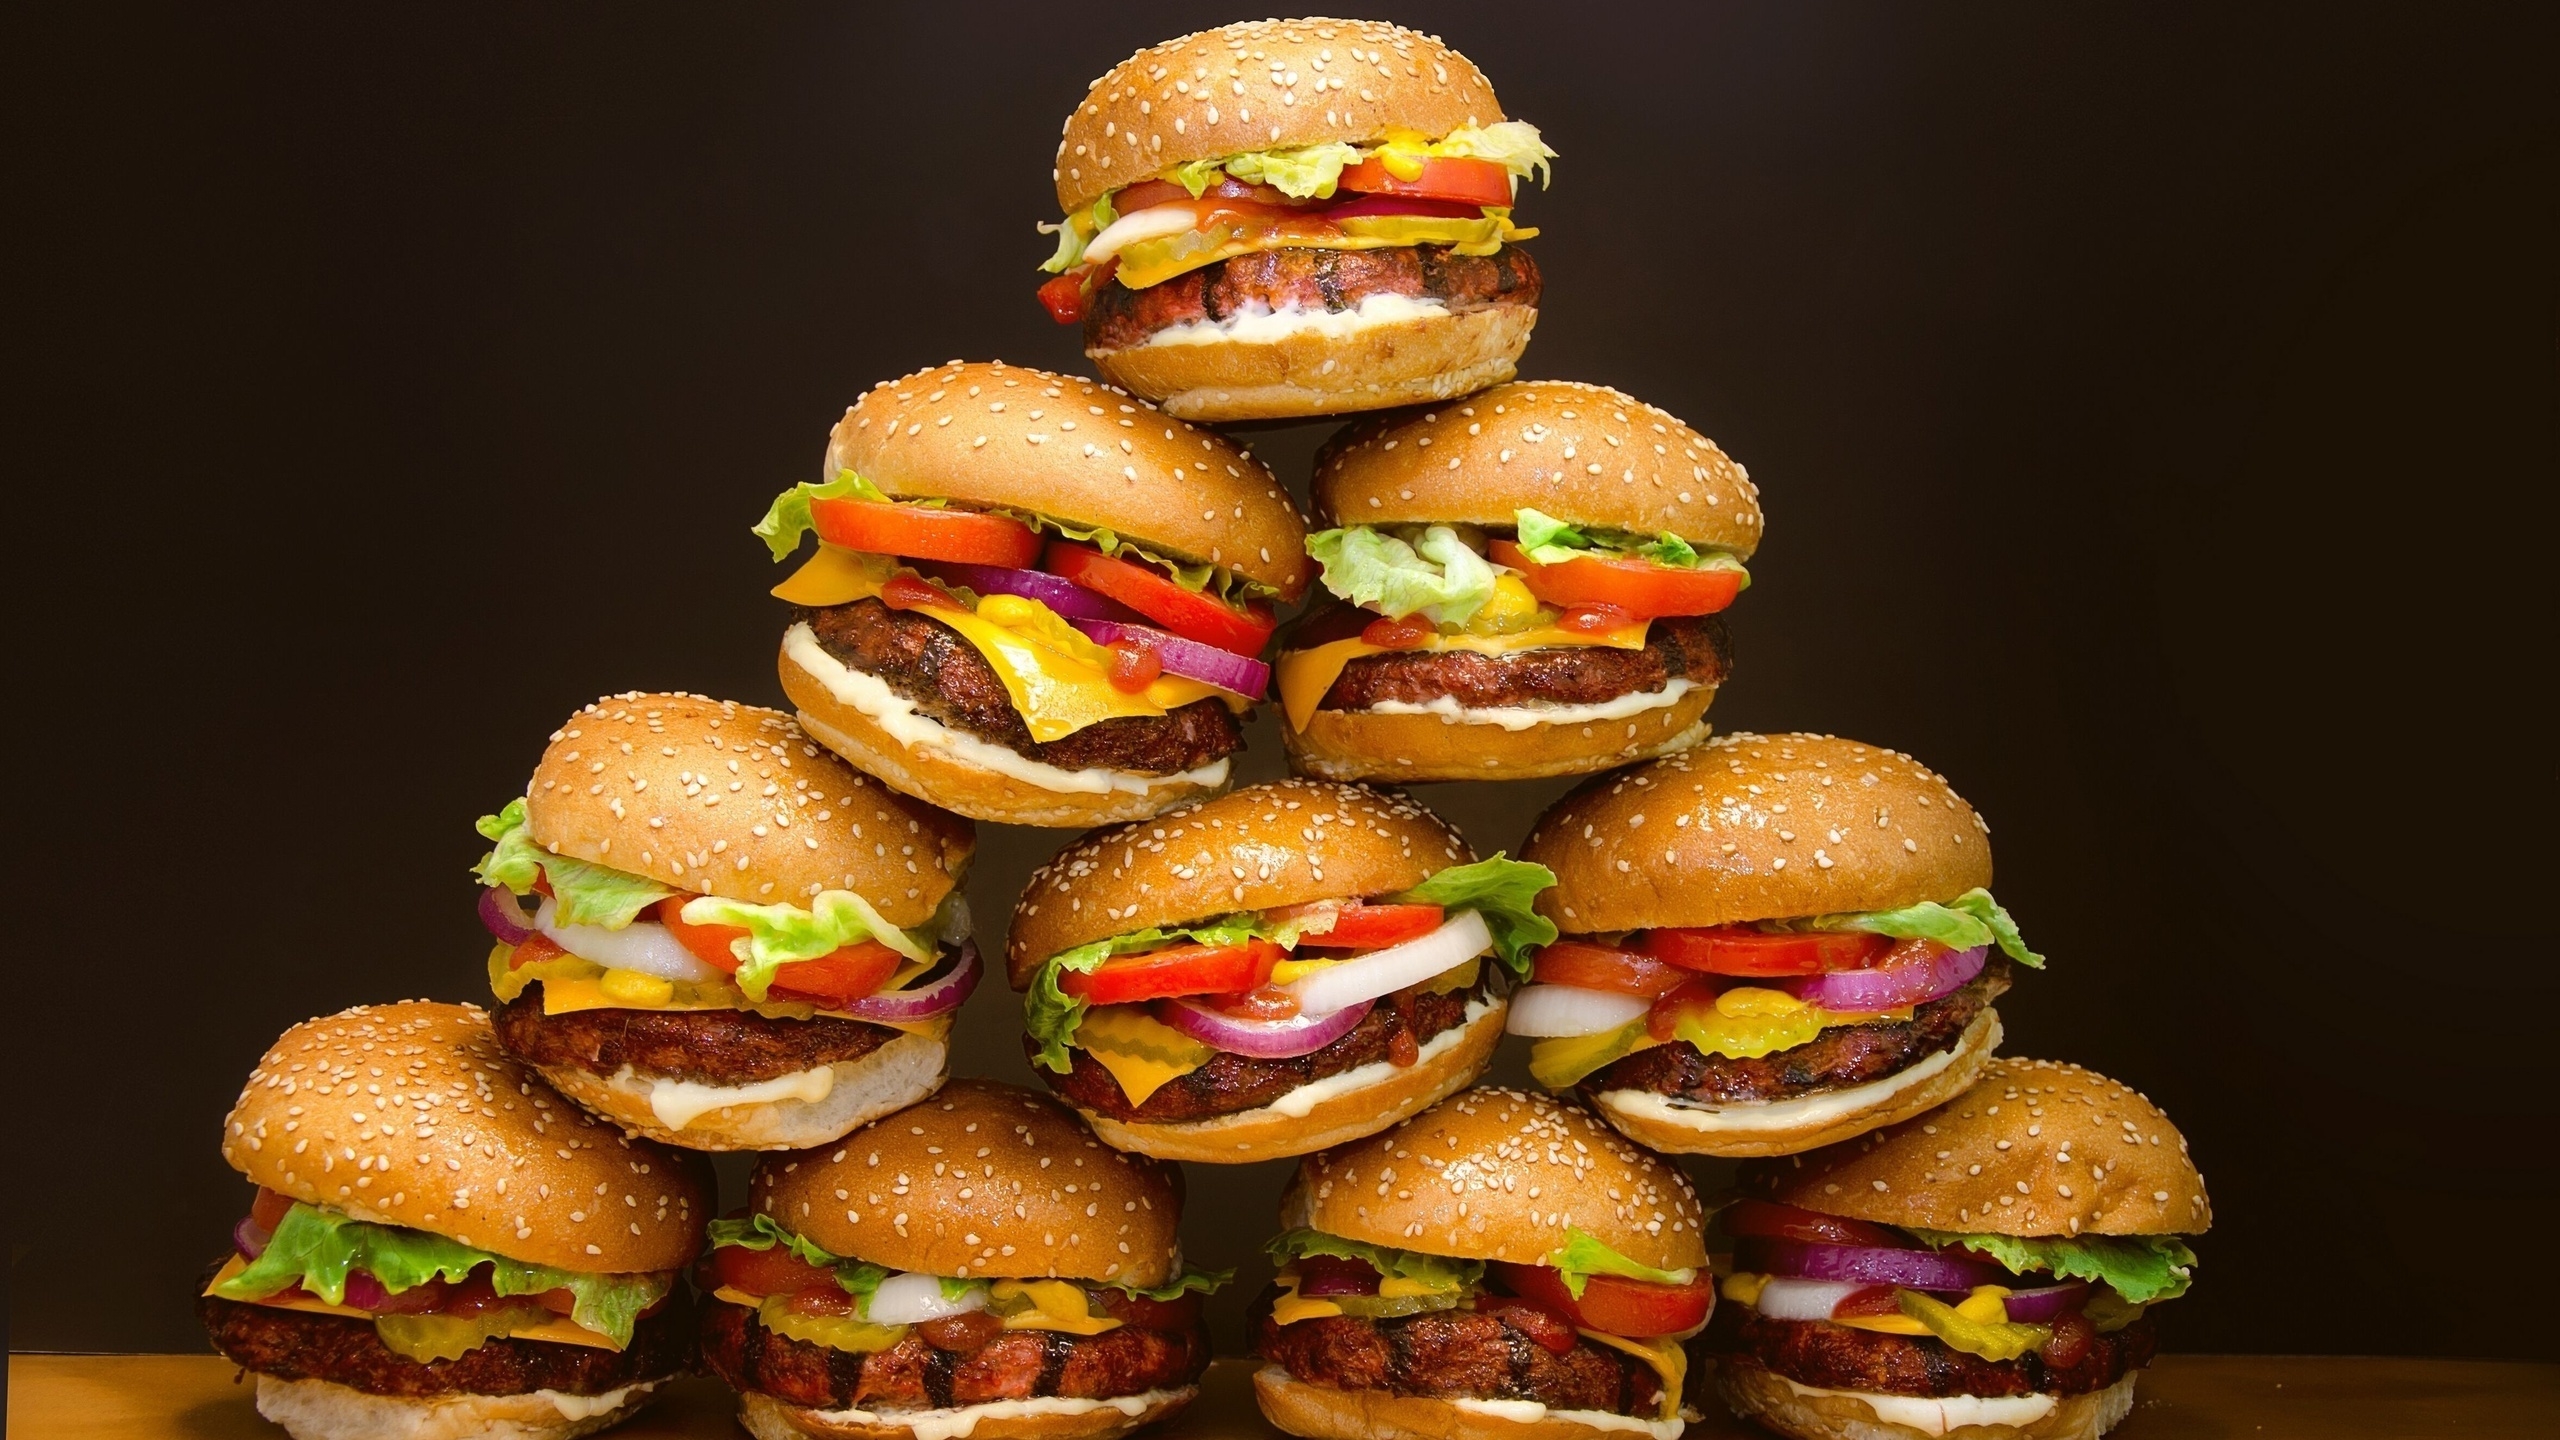 Hamburgers  for 2560x1440 HDTV resolution